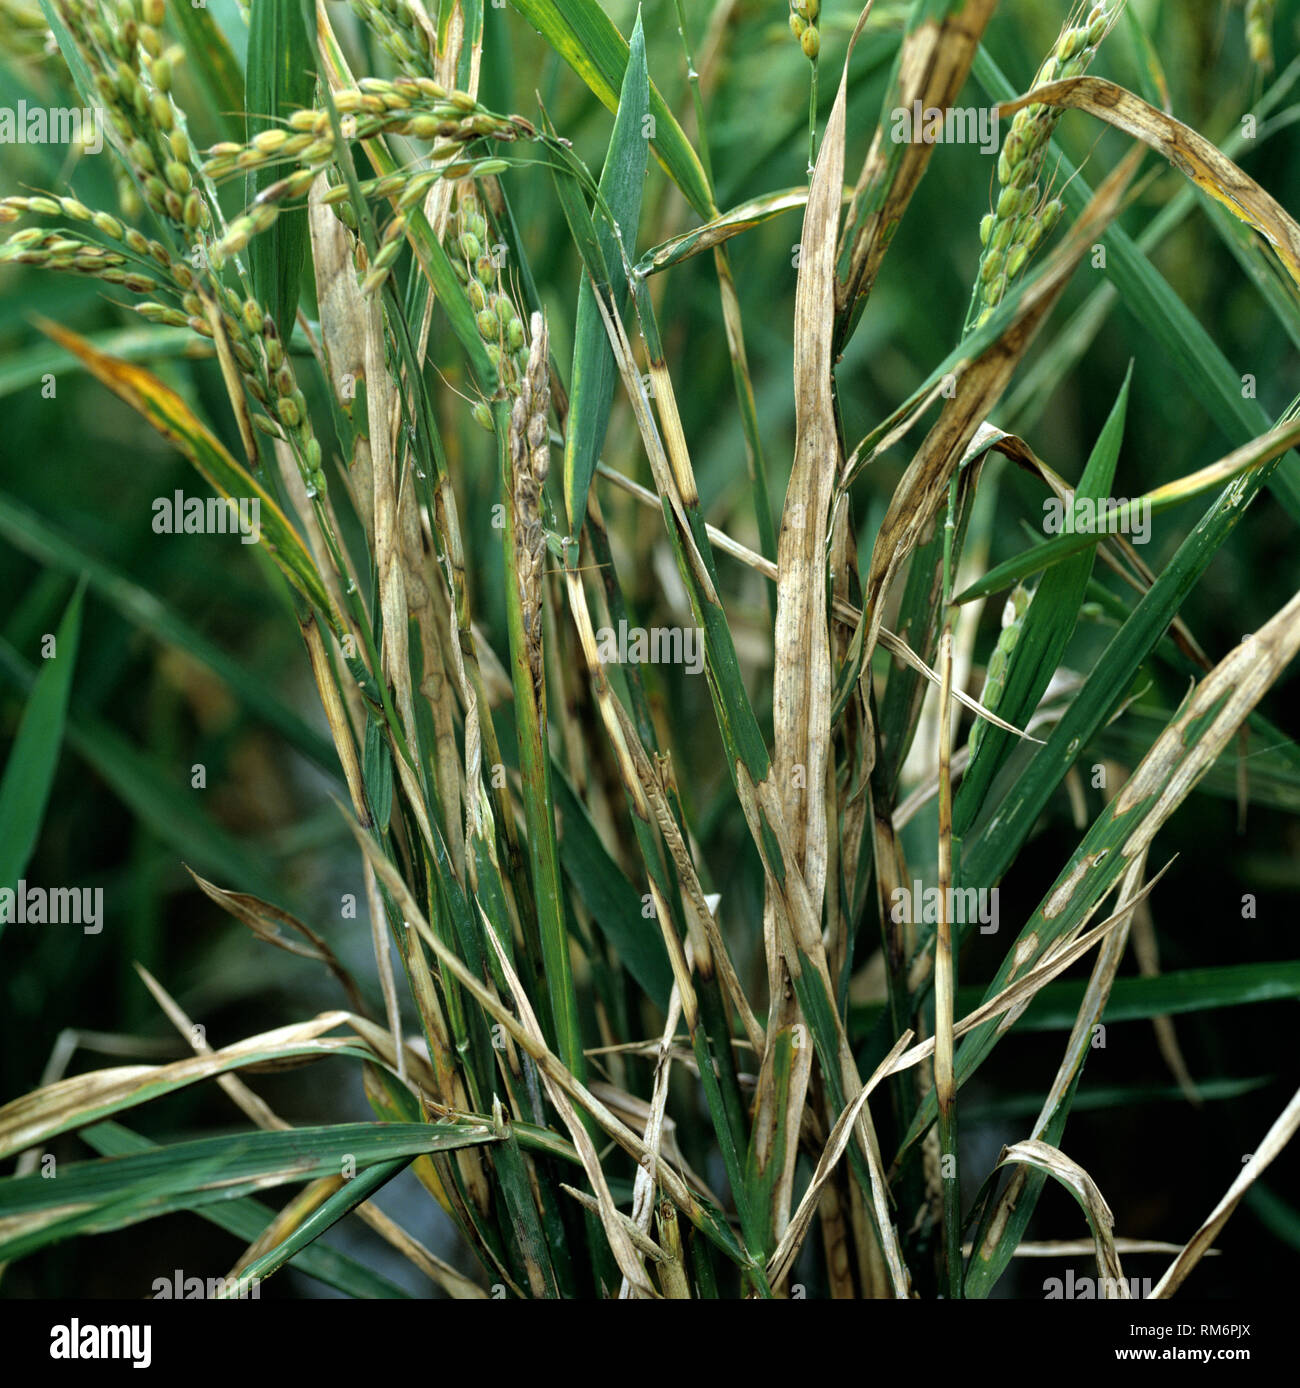 Sheath blight , Rhizoctonia solani, disease infected rice crop, Luzon, Philippines Stock Photo